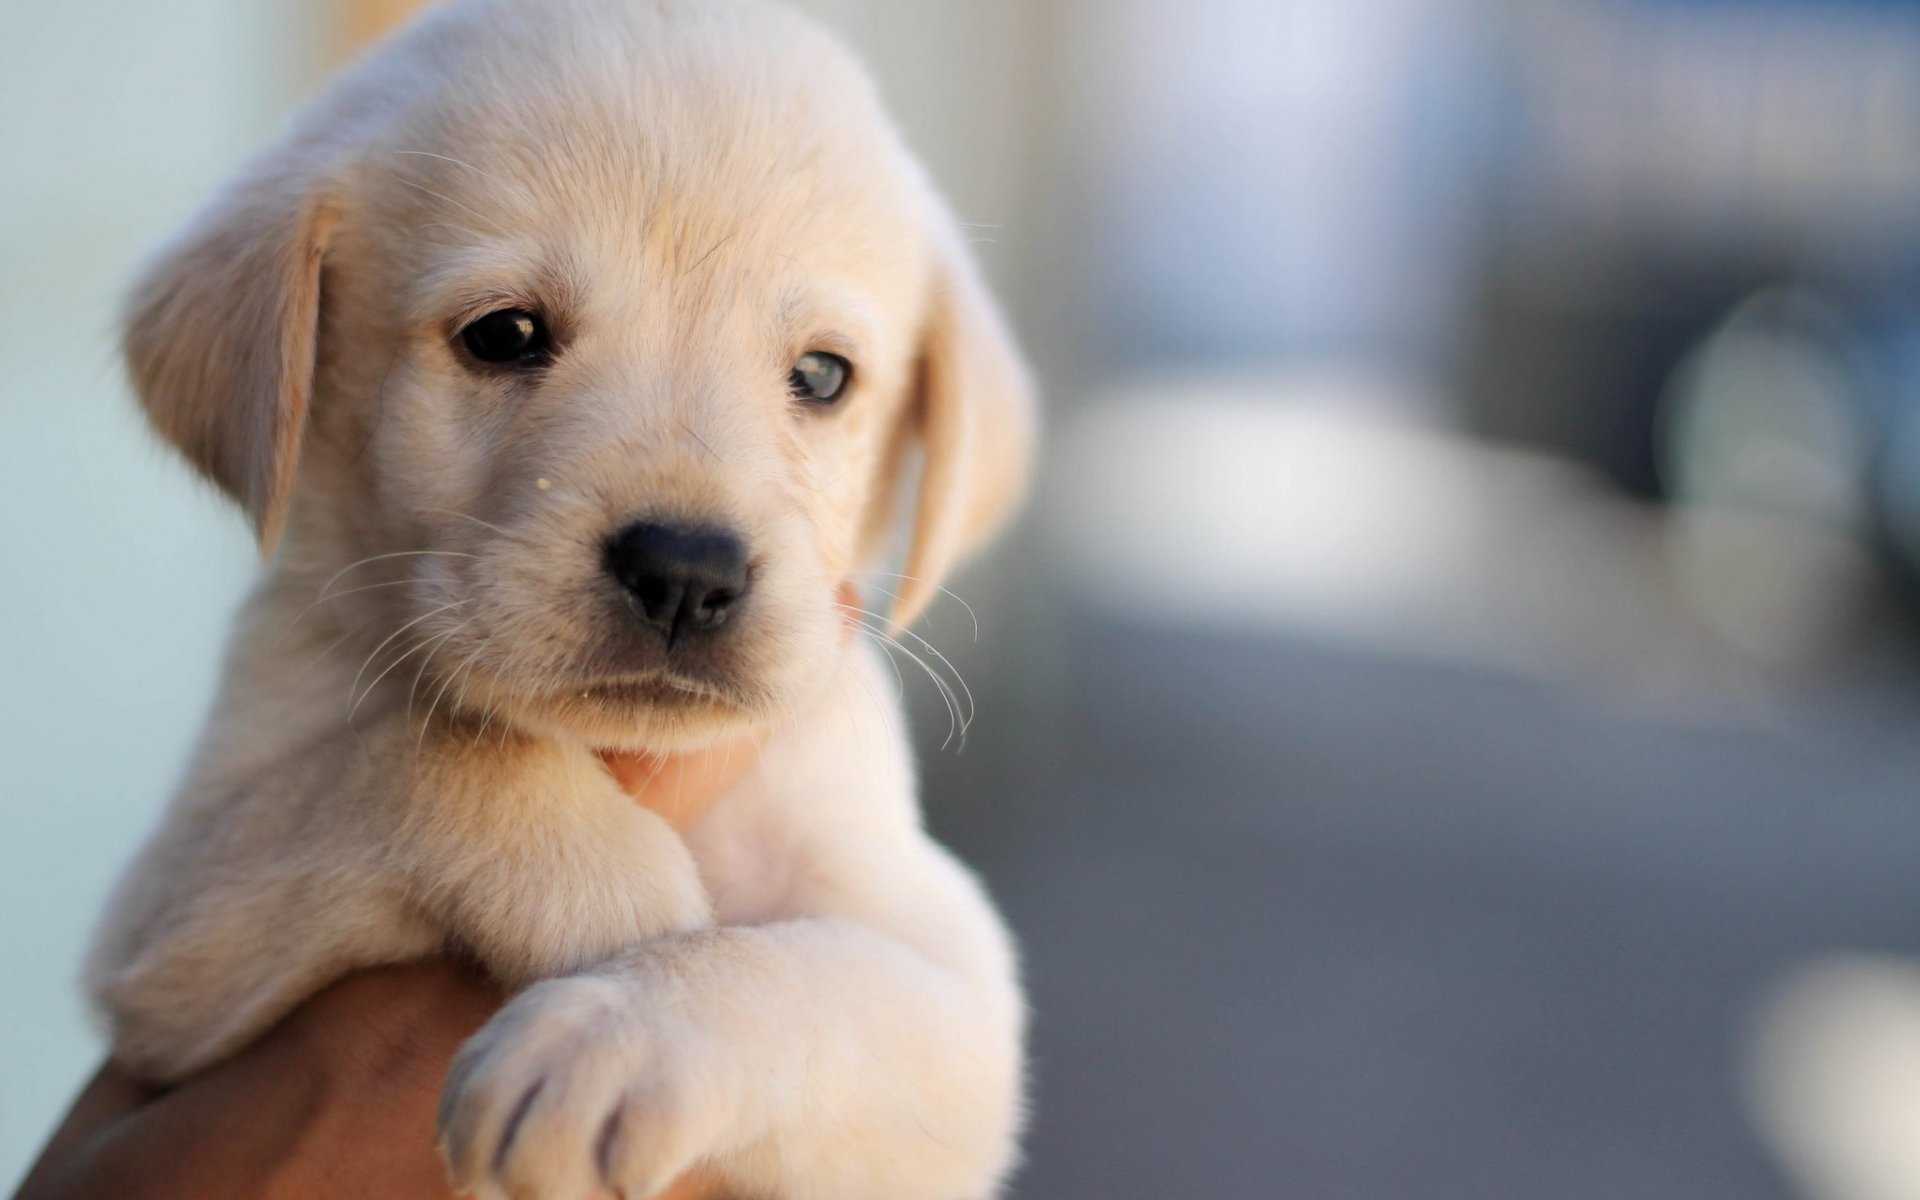 HD desktop wallpaper: Dogs, Dog, Close Up, Animal, Puppy, Labrador, Cute,  Labrador Retriever download free picture #377493